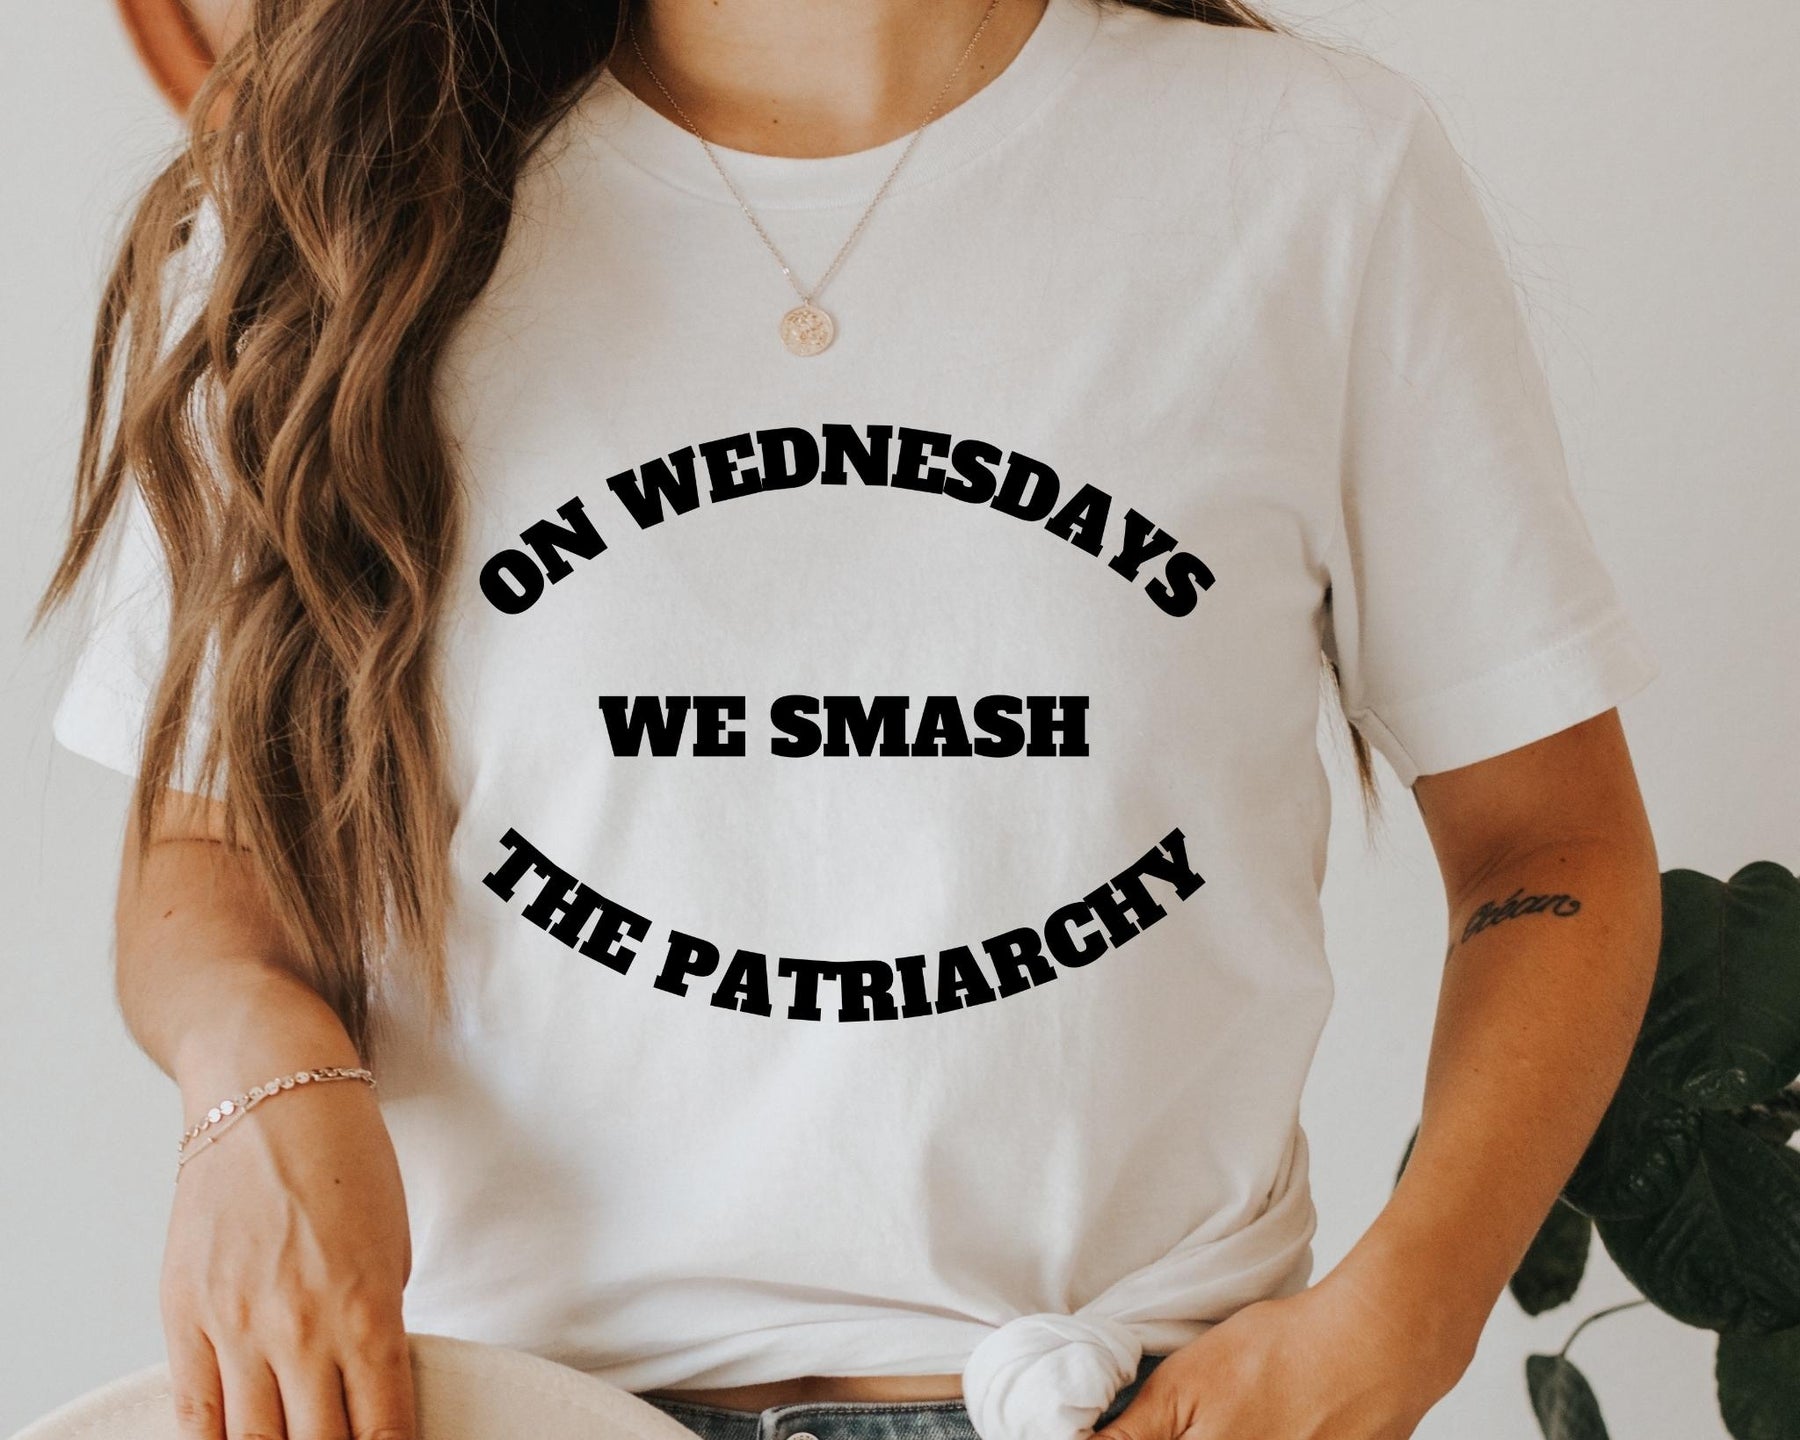 On Wednesdays We Smash the Patriarchy T-Shirt